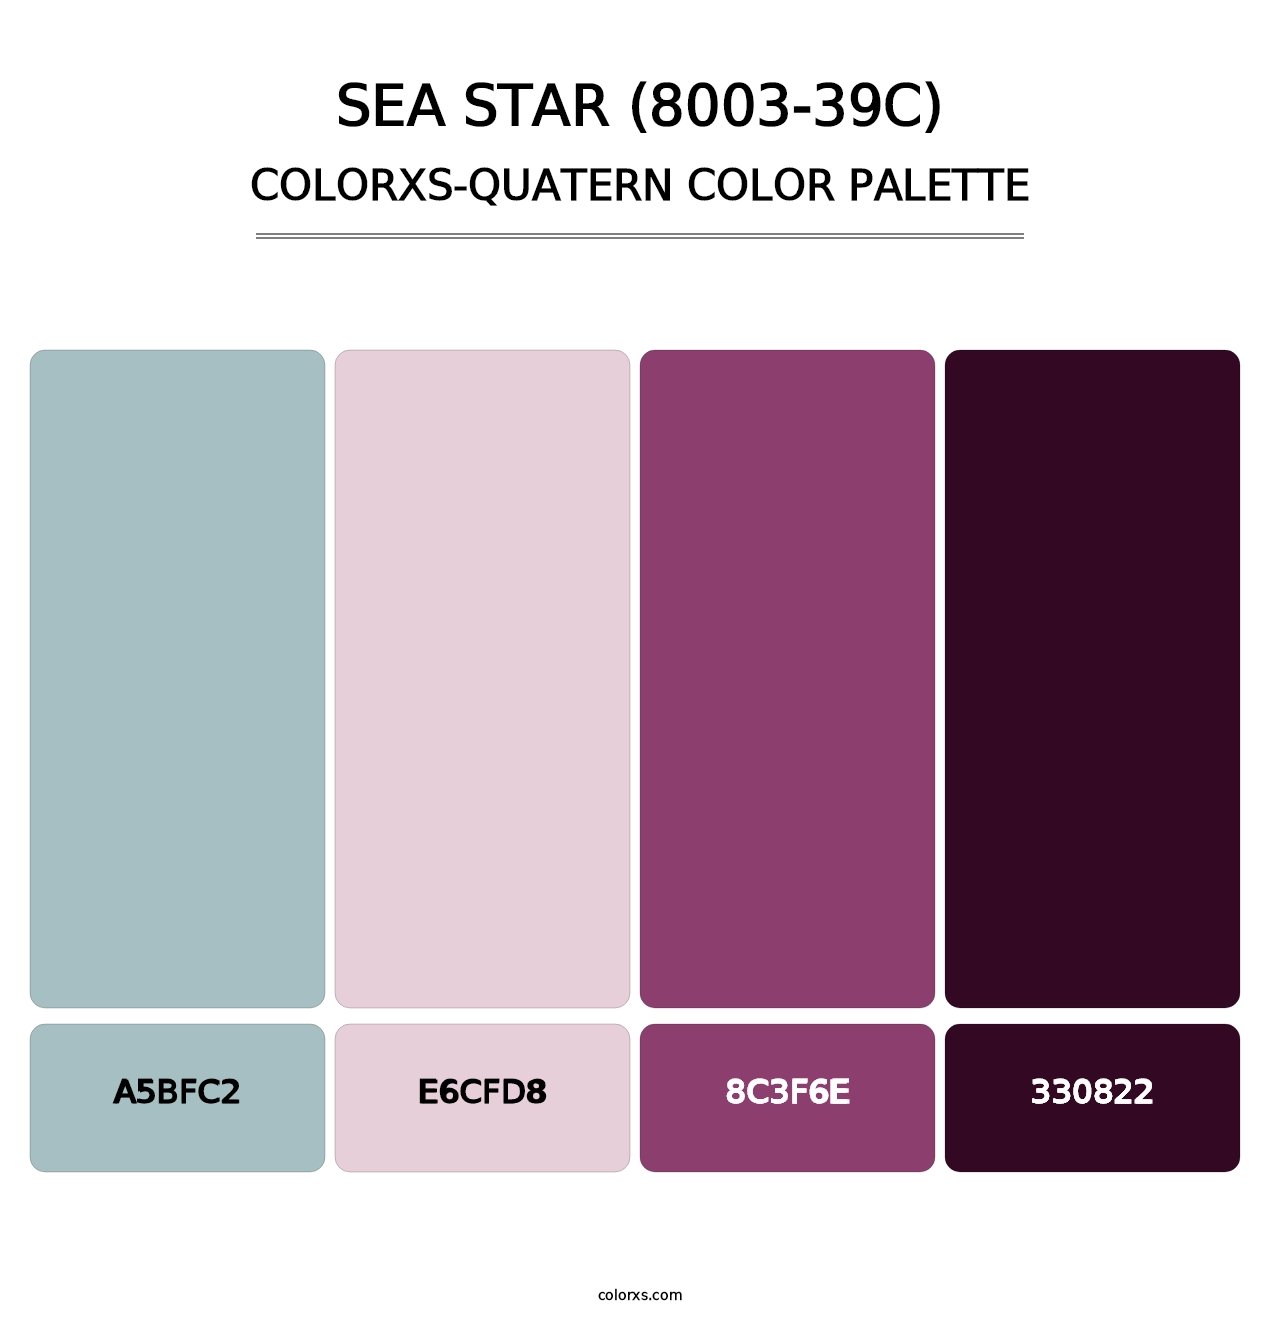 Sea Star (8003-39C) - Colorxs Quatern Palette